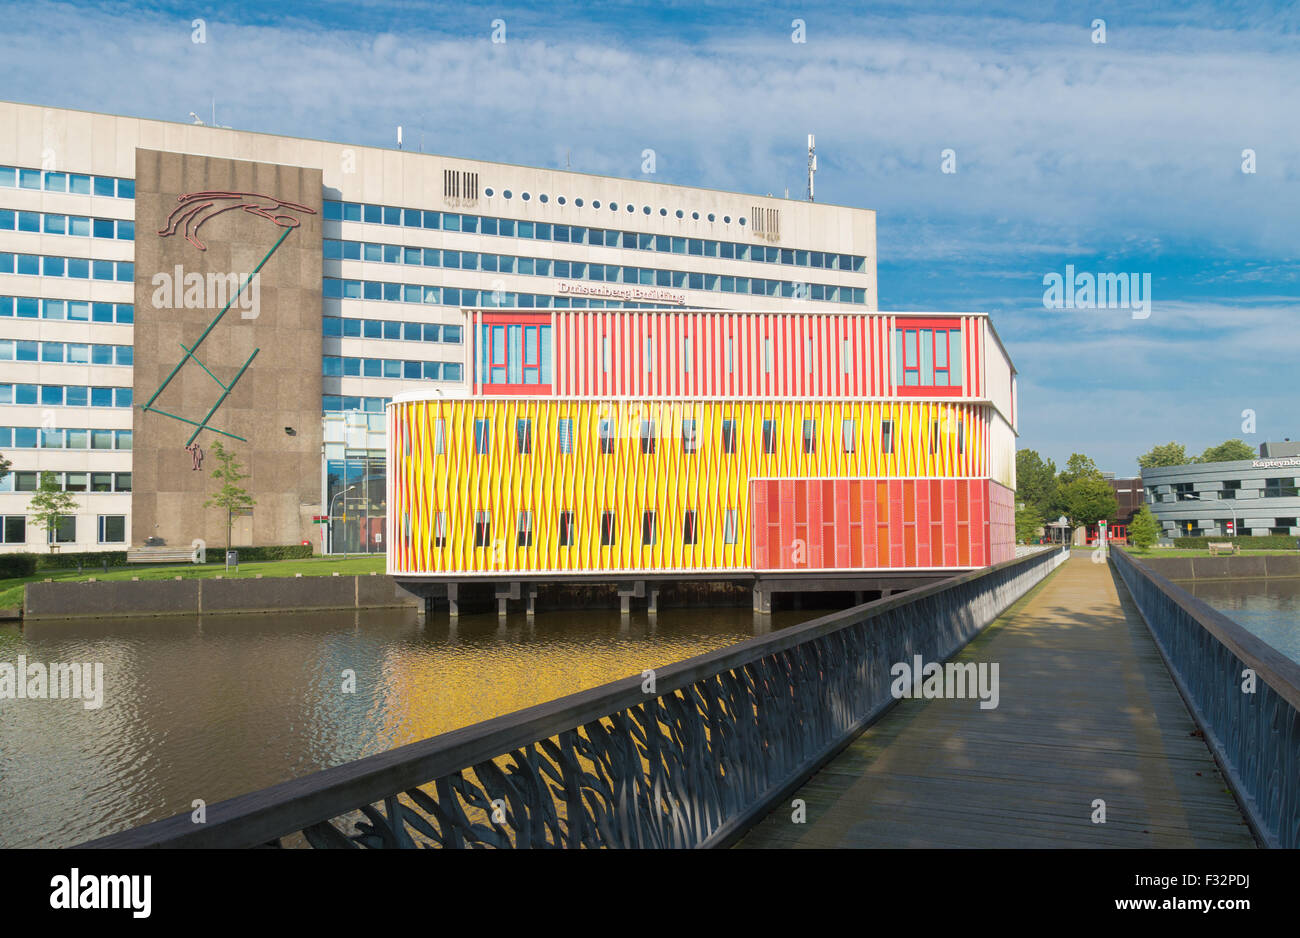 GRONINGEN, NETHERLANDS - AUGUST 22, 2015: Modern orange building on the groningen university campus. The university counts aroun Stock Photo